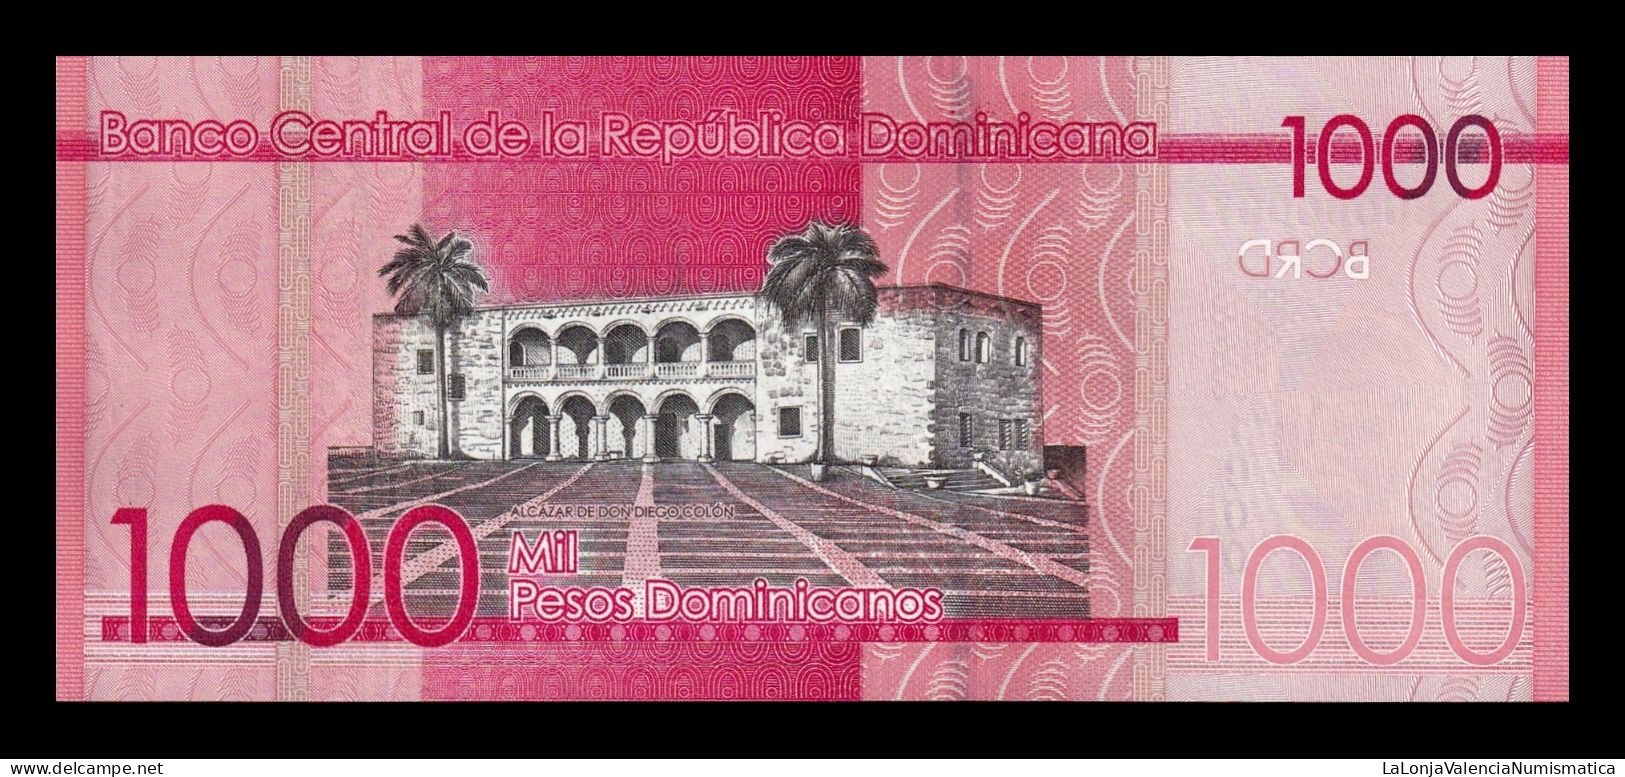 República Dominicana 1000 Pesos Dominicanos 2015 Pick 193b Low Serial 1001 Sc Unc - Dominicana